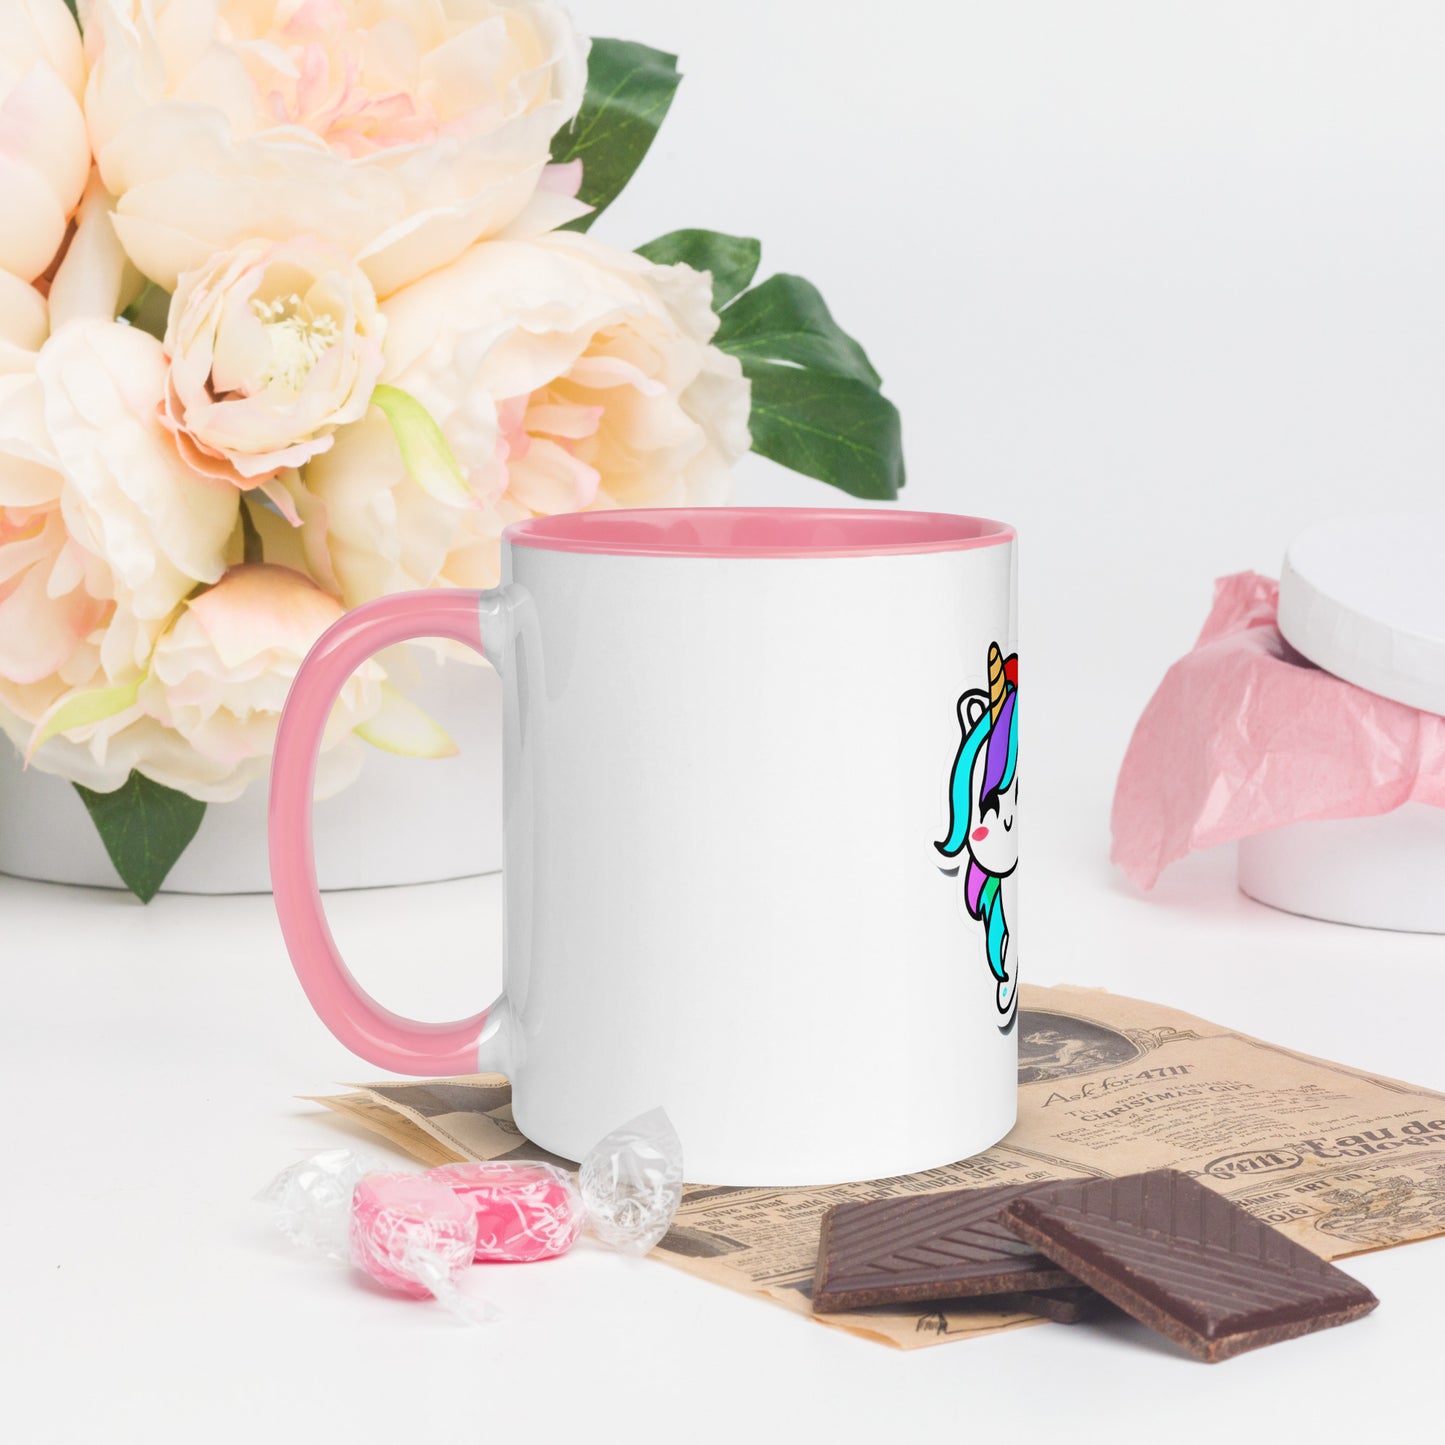 side view of white coffee mug with pink handle